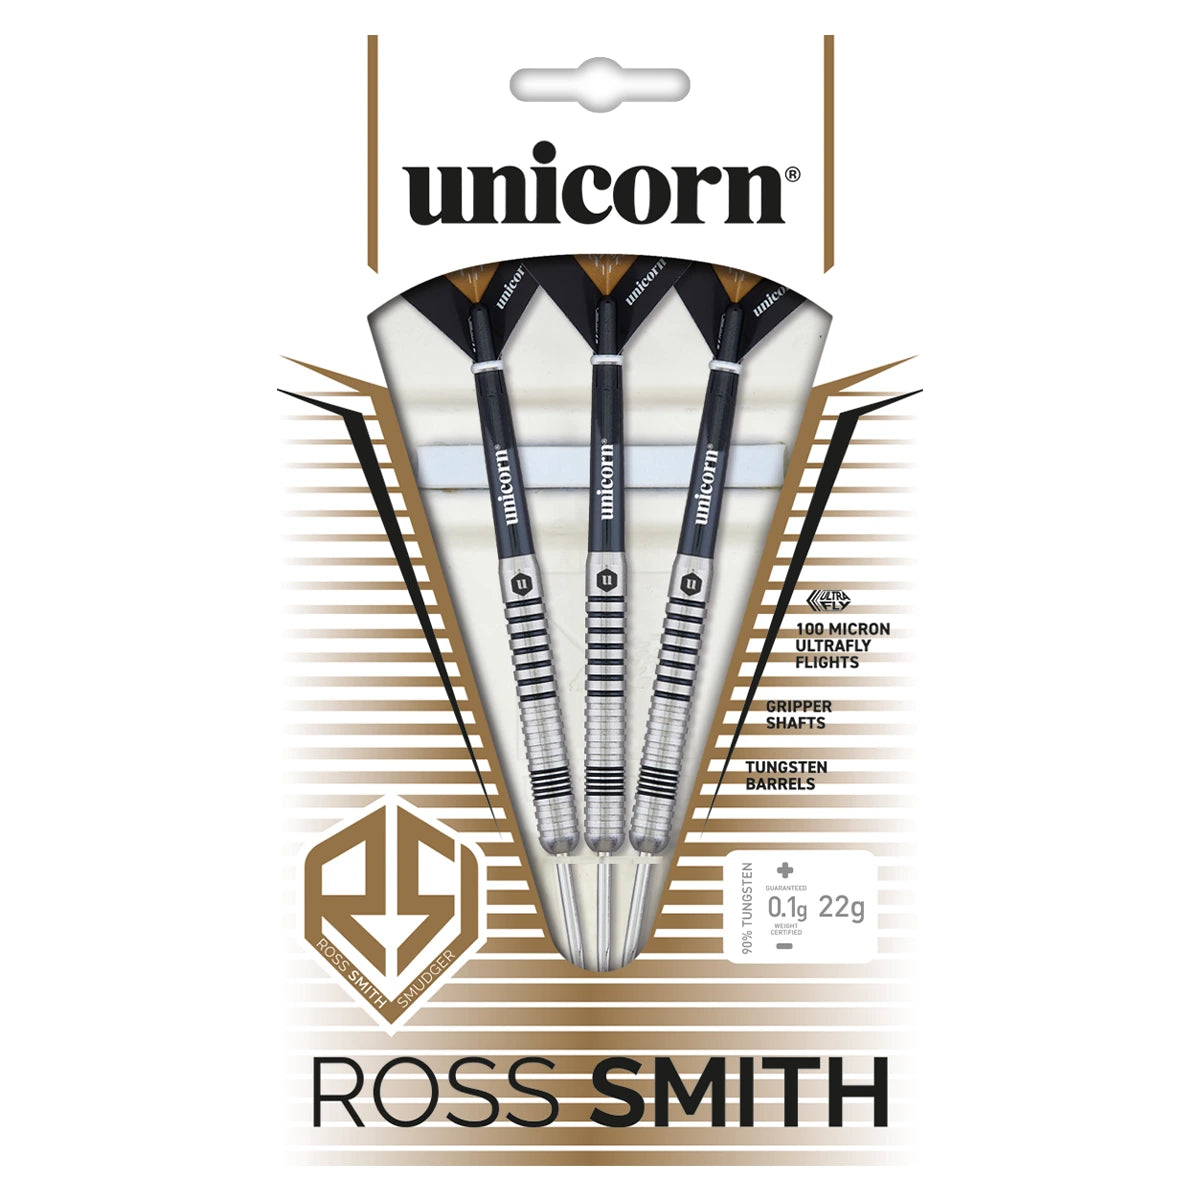 Unicorn Ross Smith Smudger 80% Tungsten 24g Darts